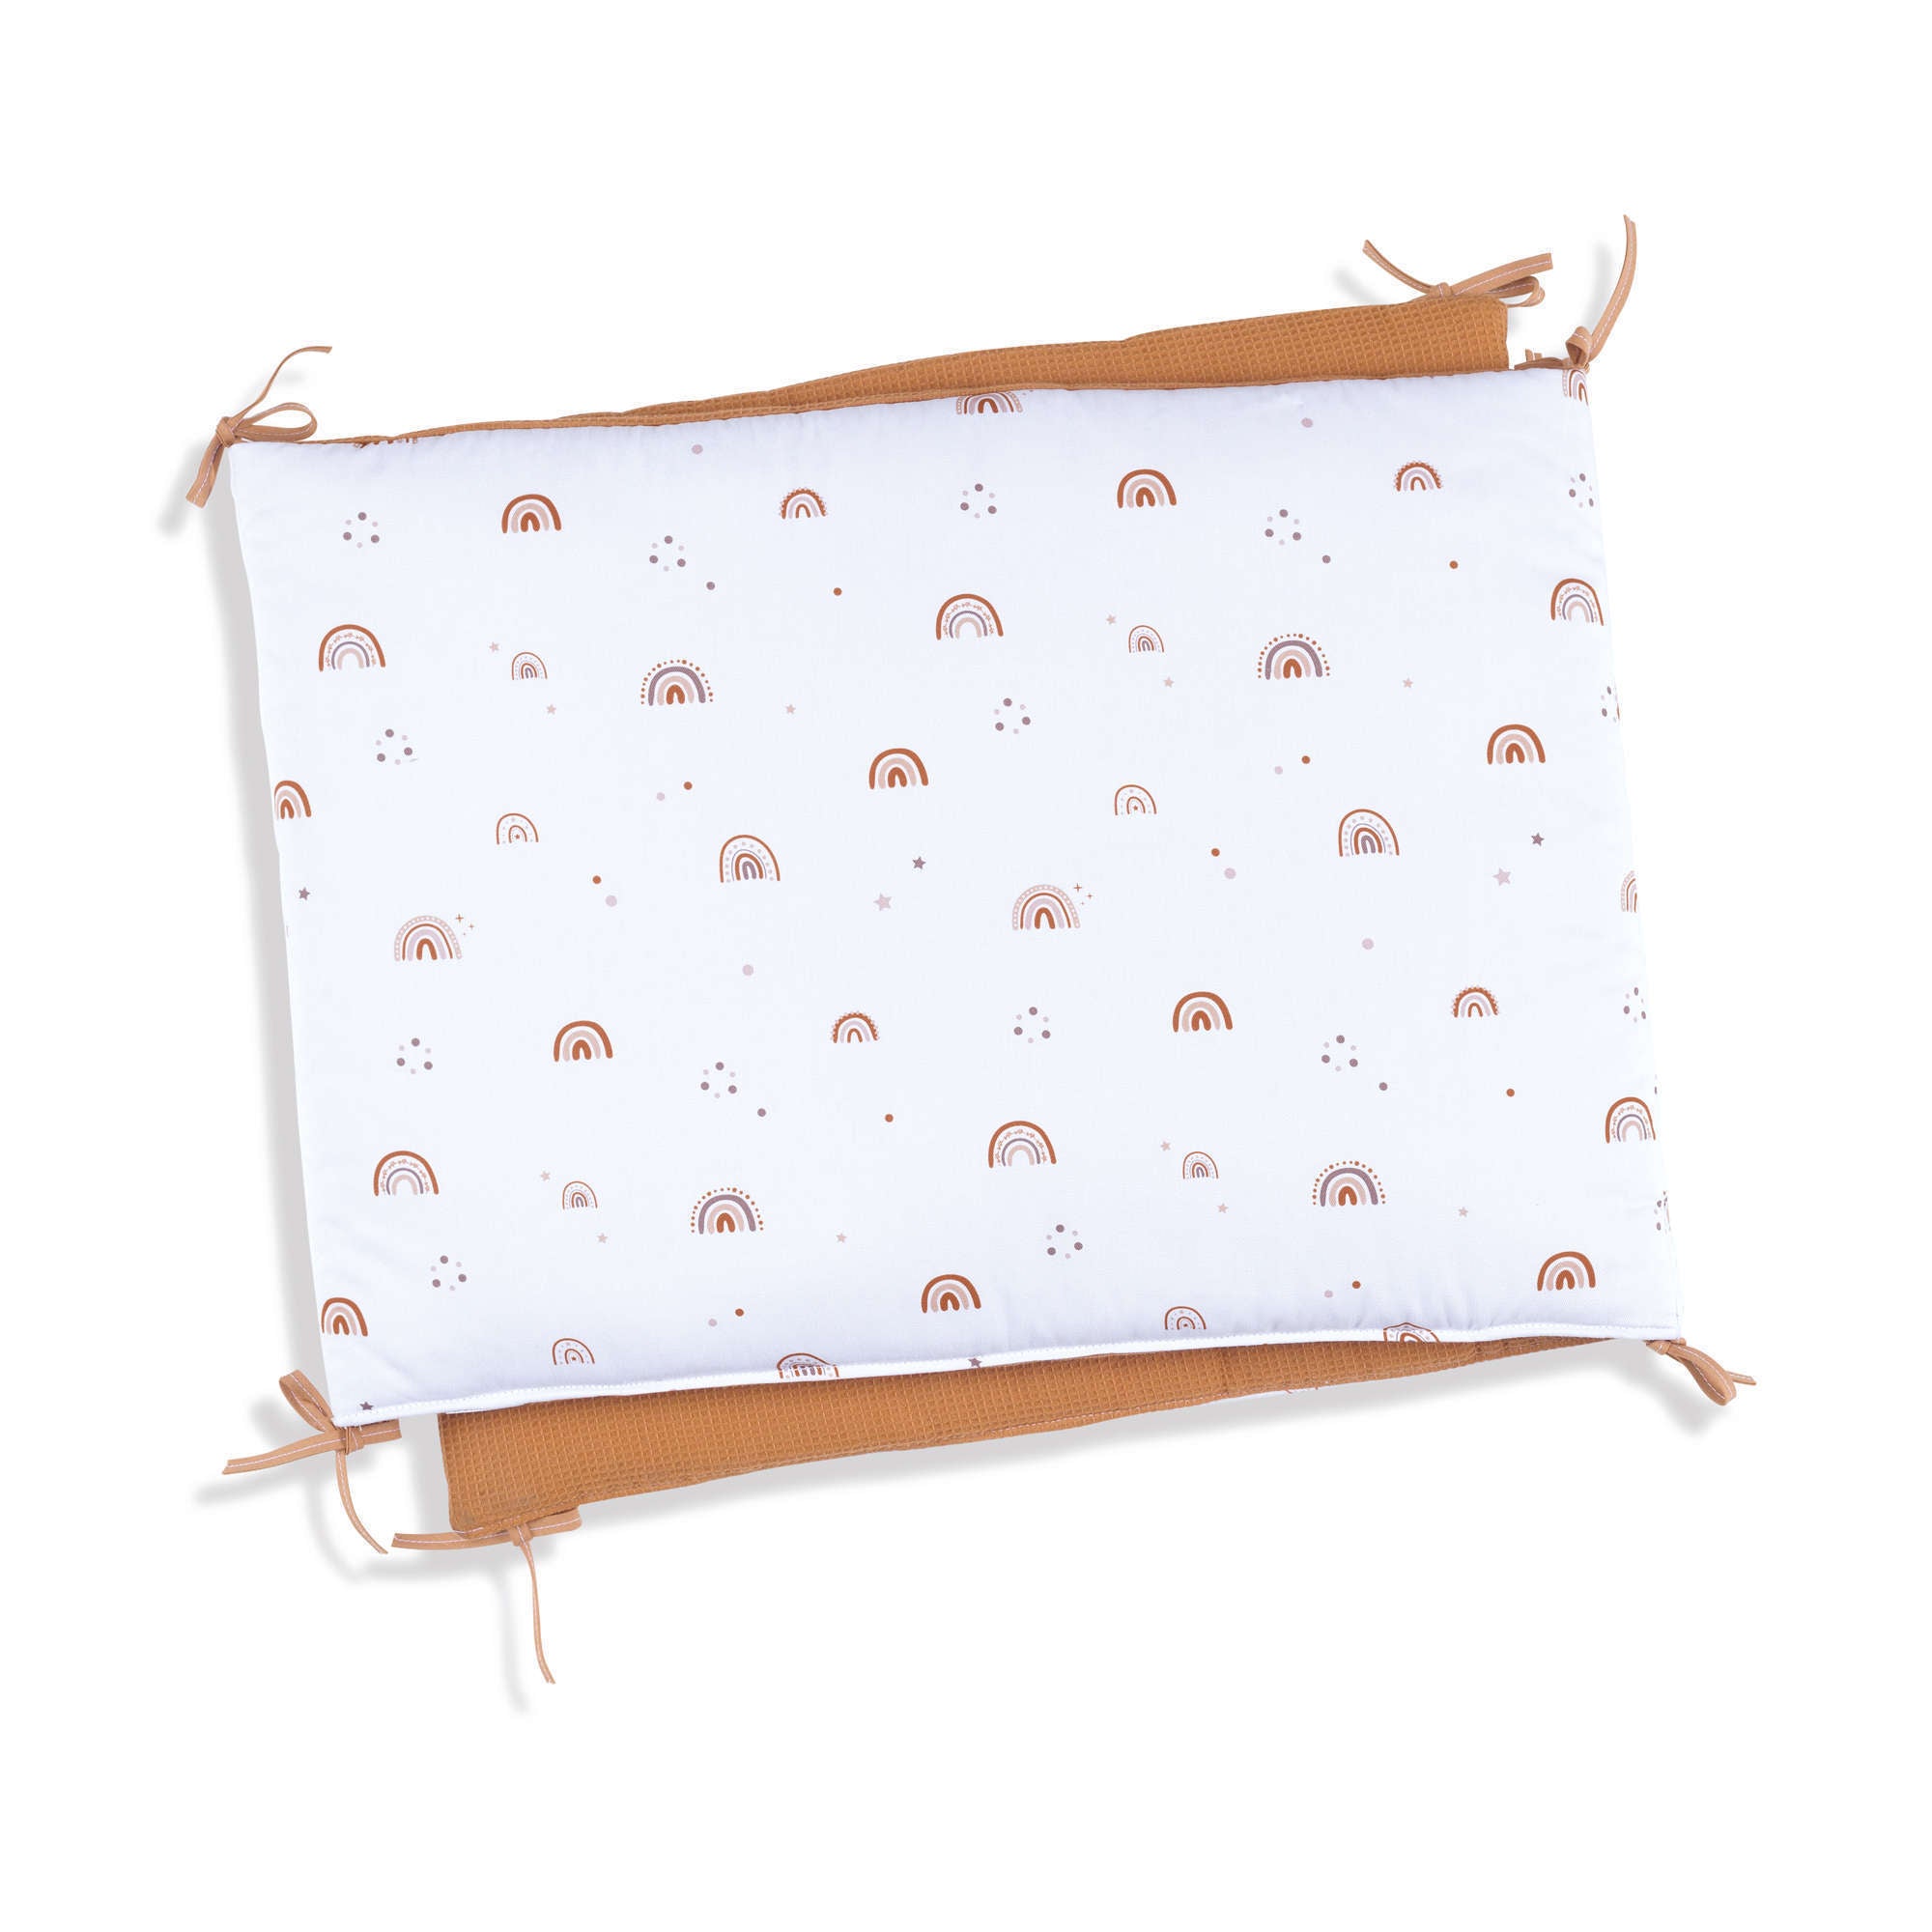 Cama infantil montessori con textil estampado teja (70x140 cm